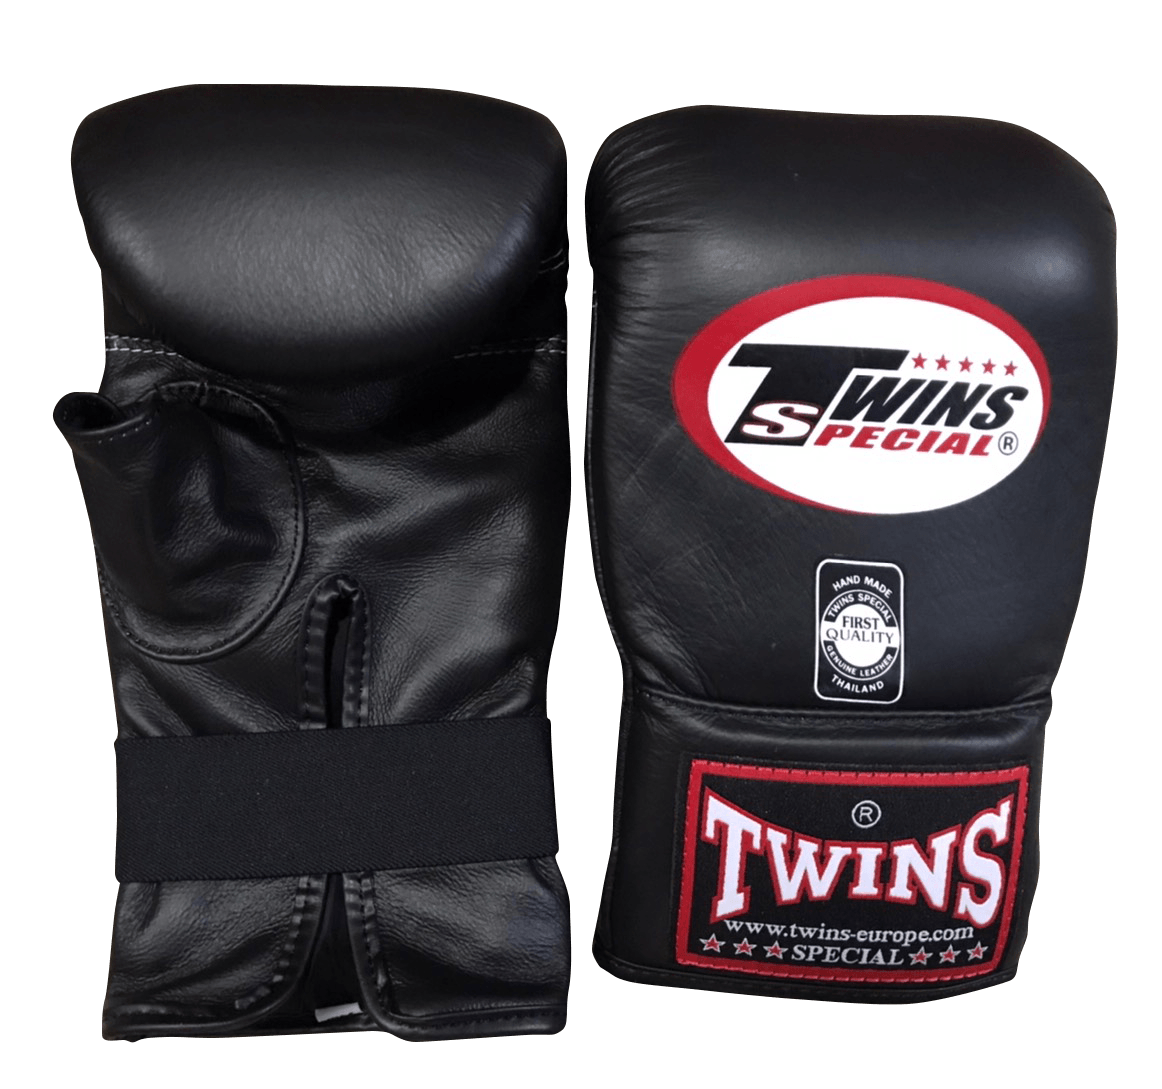 Twins special TBGL1H black bag gloves